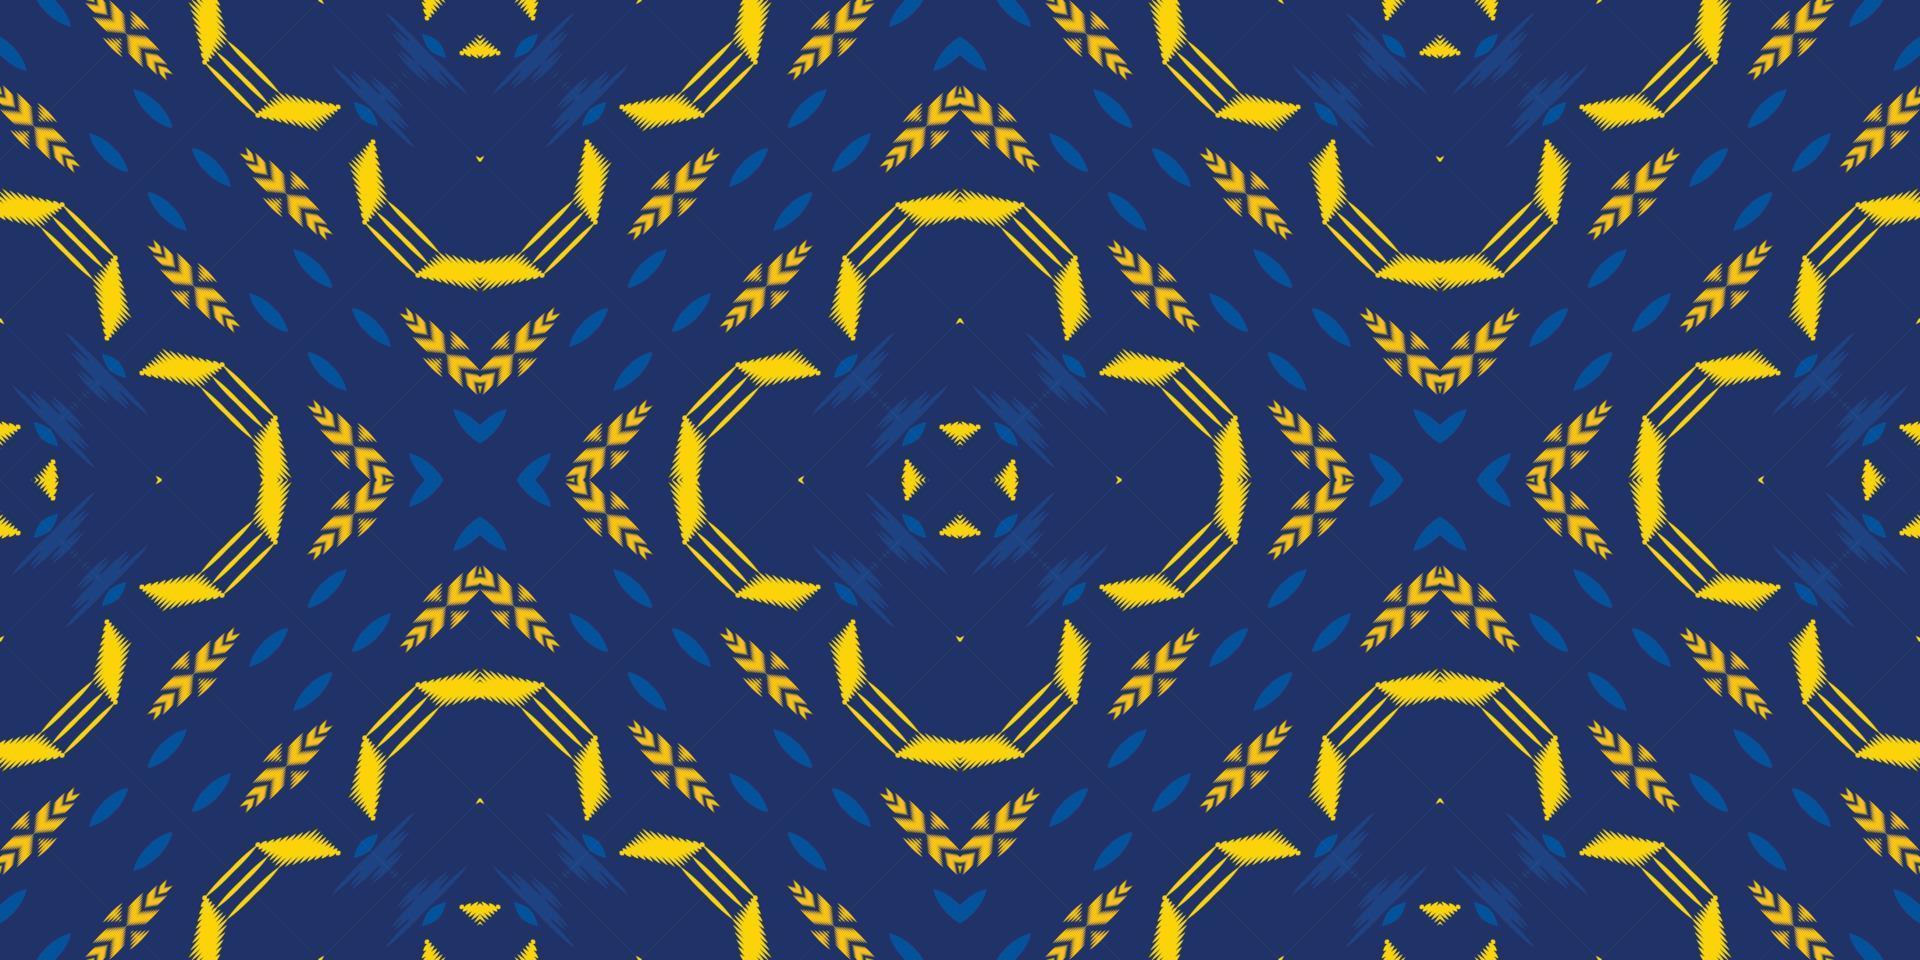 ikat floral tribal cruz de patrones sin fisuras. étnico geométrico batik ikkat vector digital diseño textil para estampados tela sari mughal cepillo símbolo franjas textura kurti kurtis kurtas